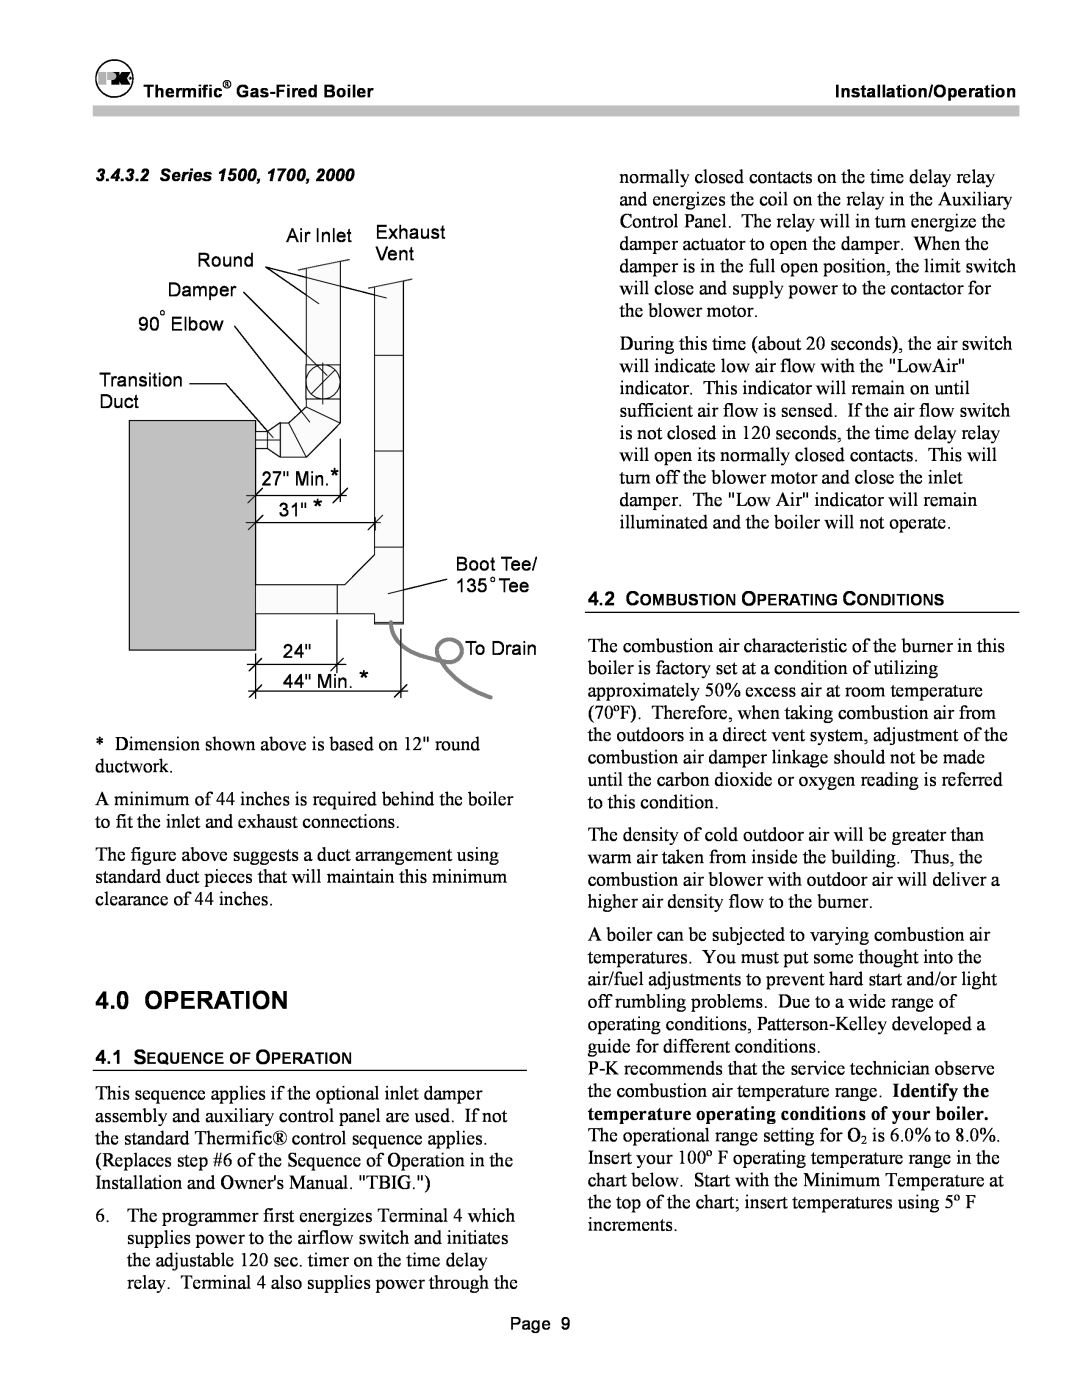 Patterson-Kelley DVSCM-02 owner manual 4.0OPERATION 